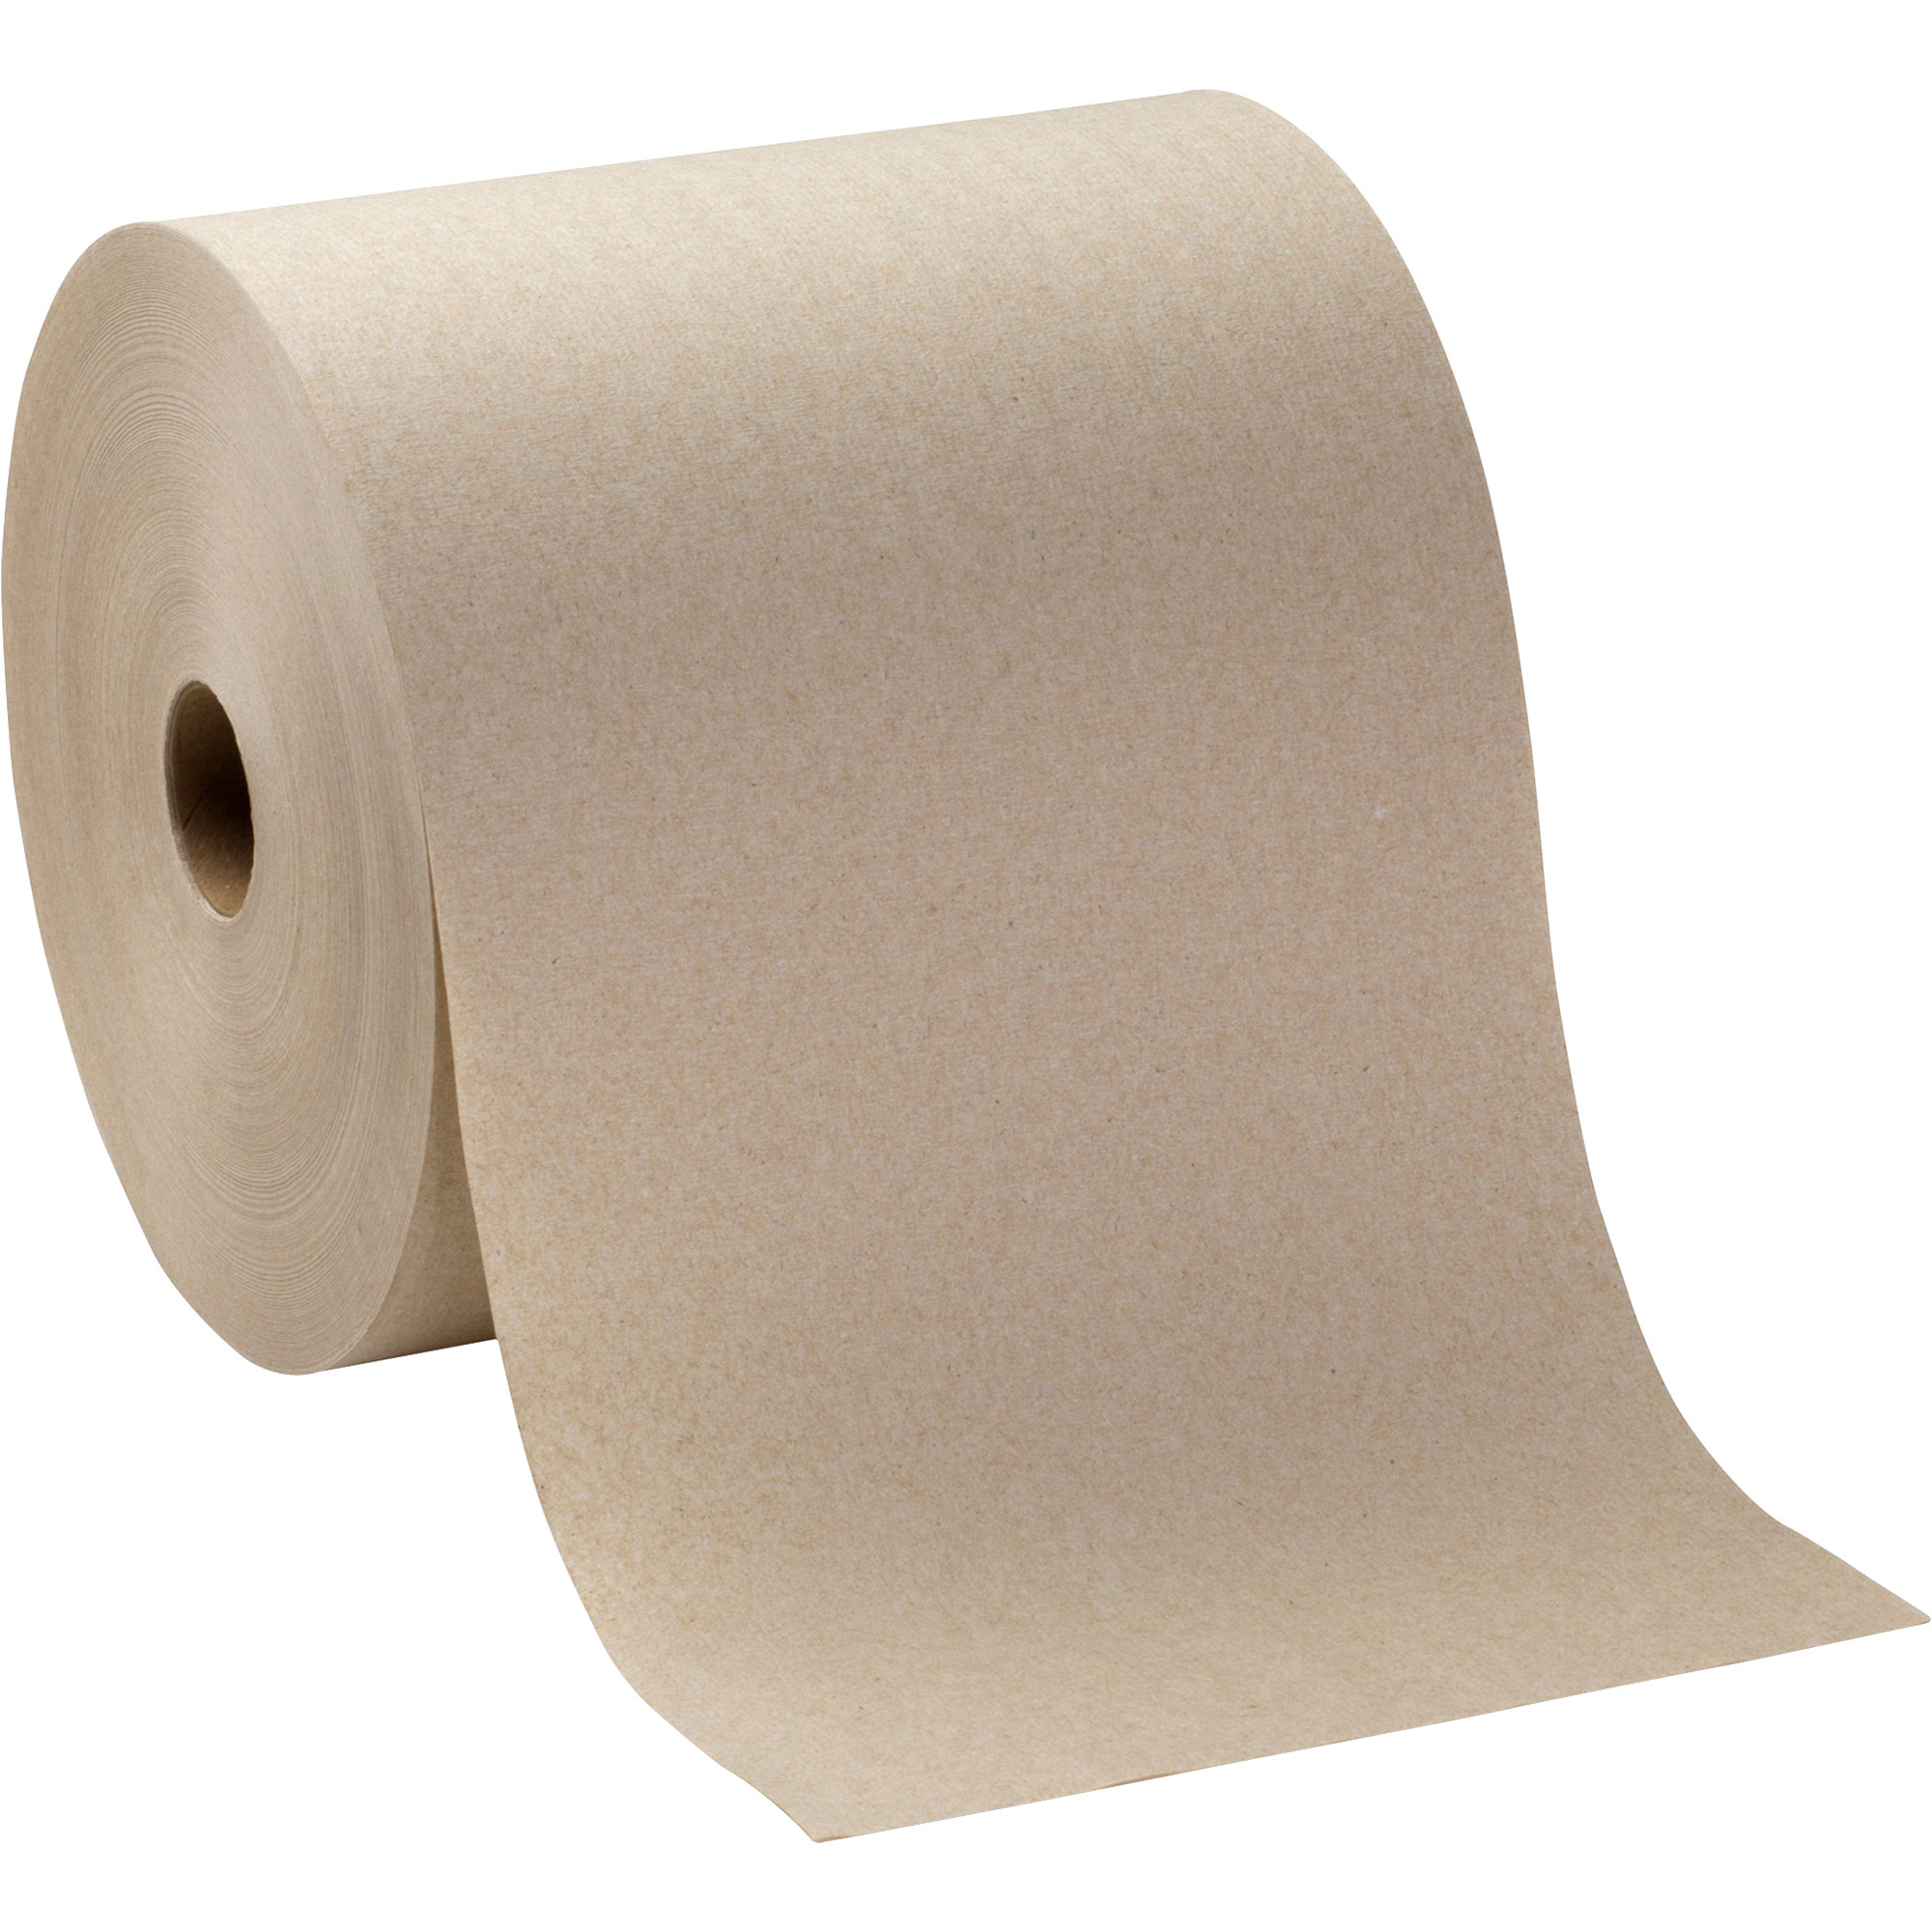 Seventh Generation Paper Towels, Jumbo Rolls, Unbleached, 2-Ply - 6 rolls